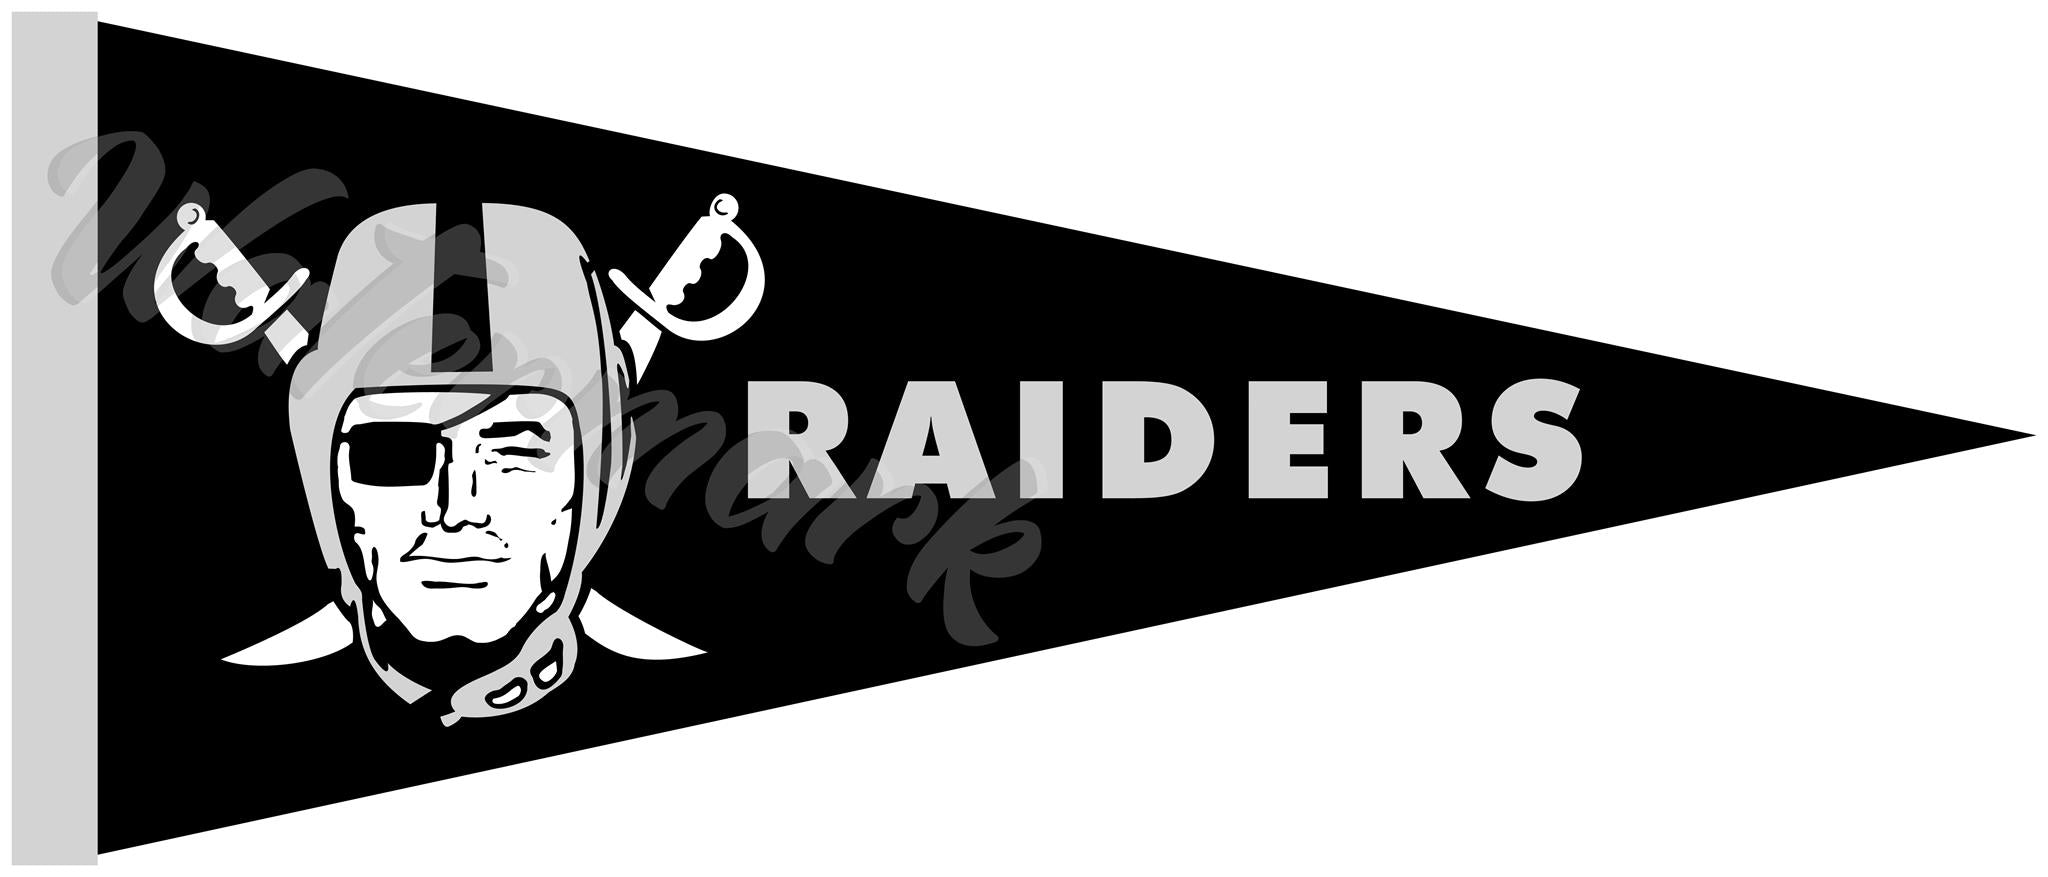 Las Vegas Raiders Decal Sticker, Highest Quality